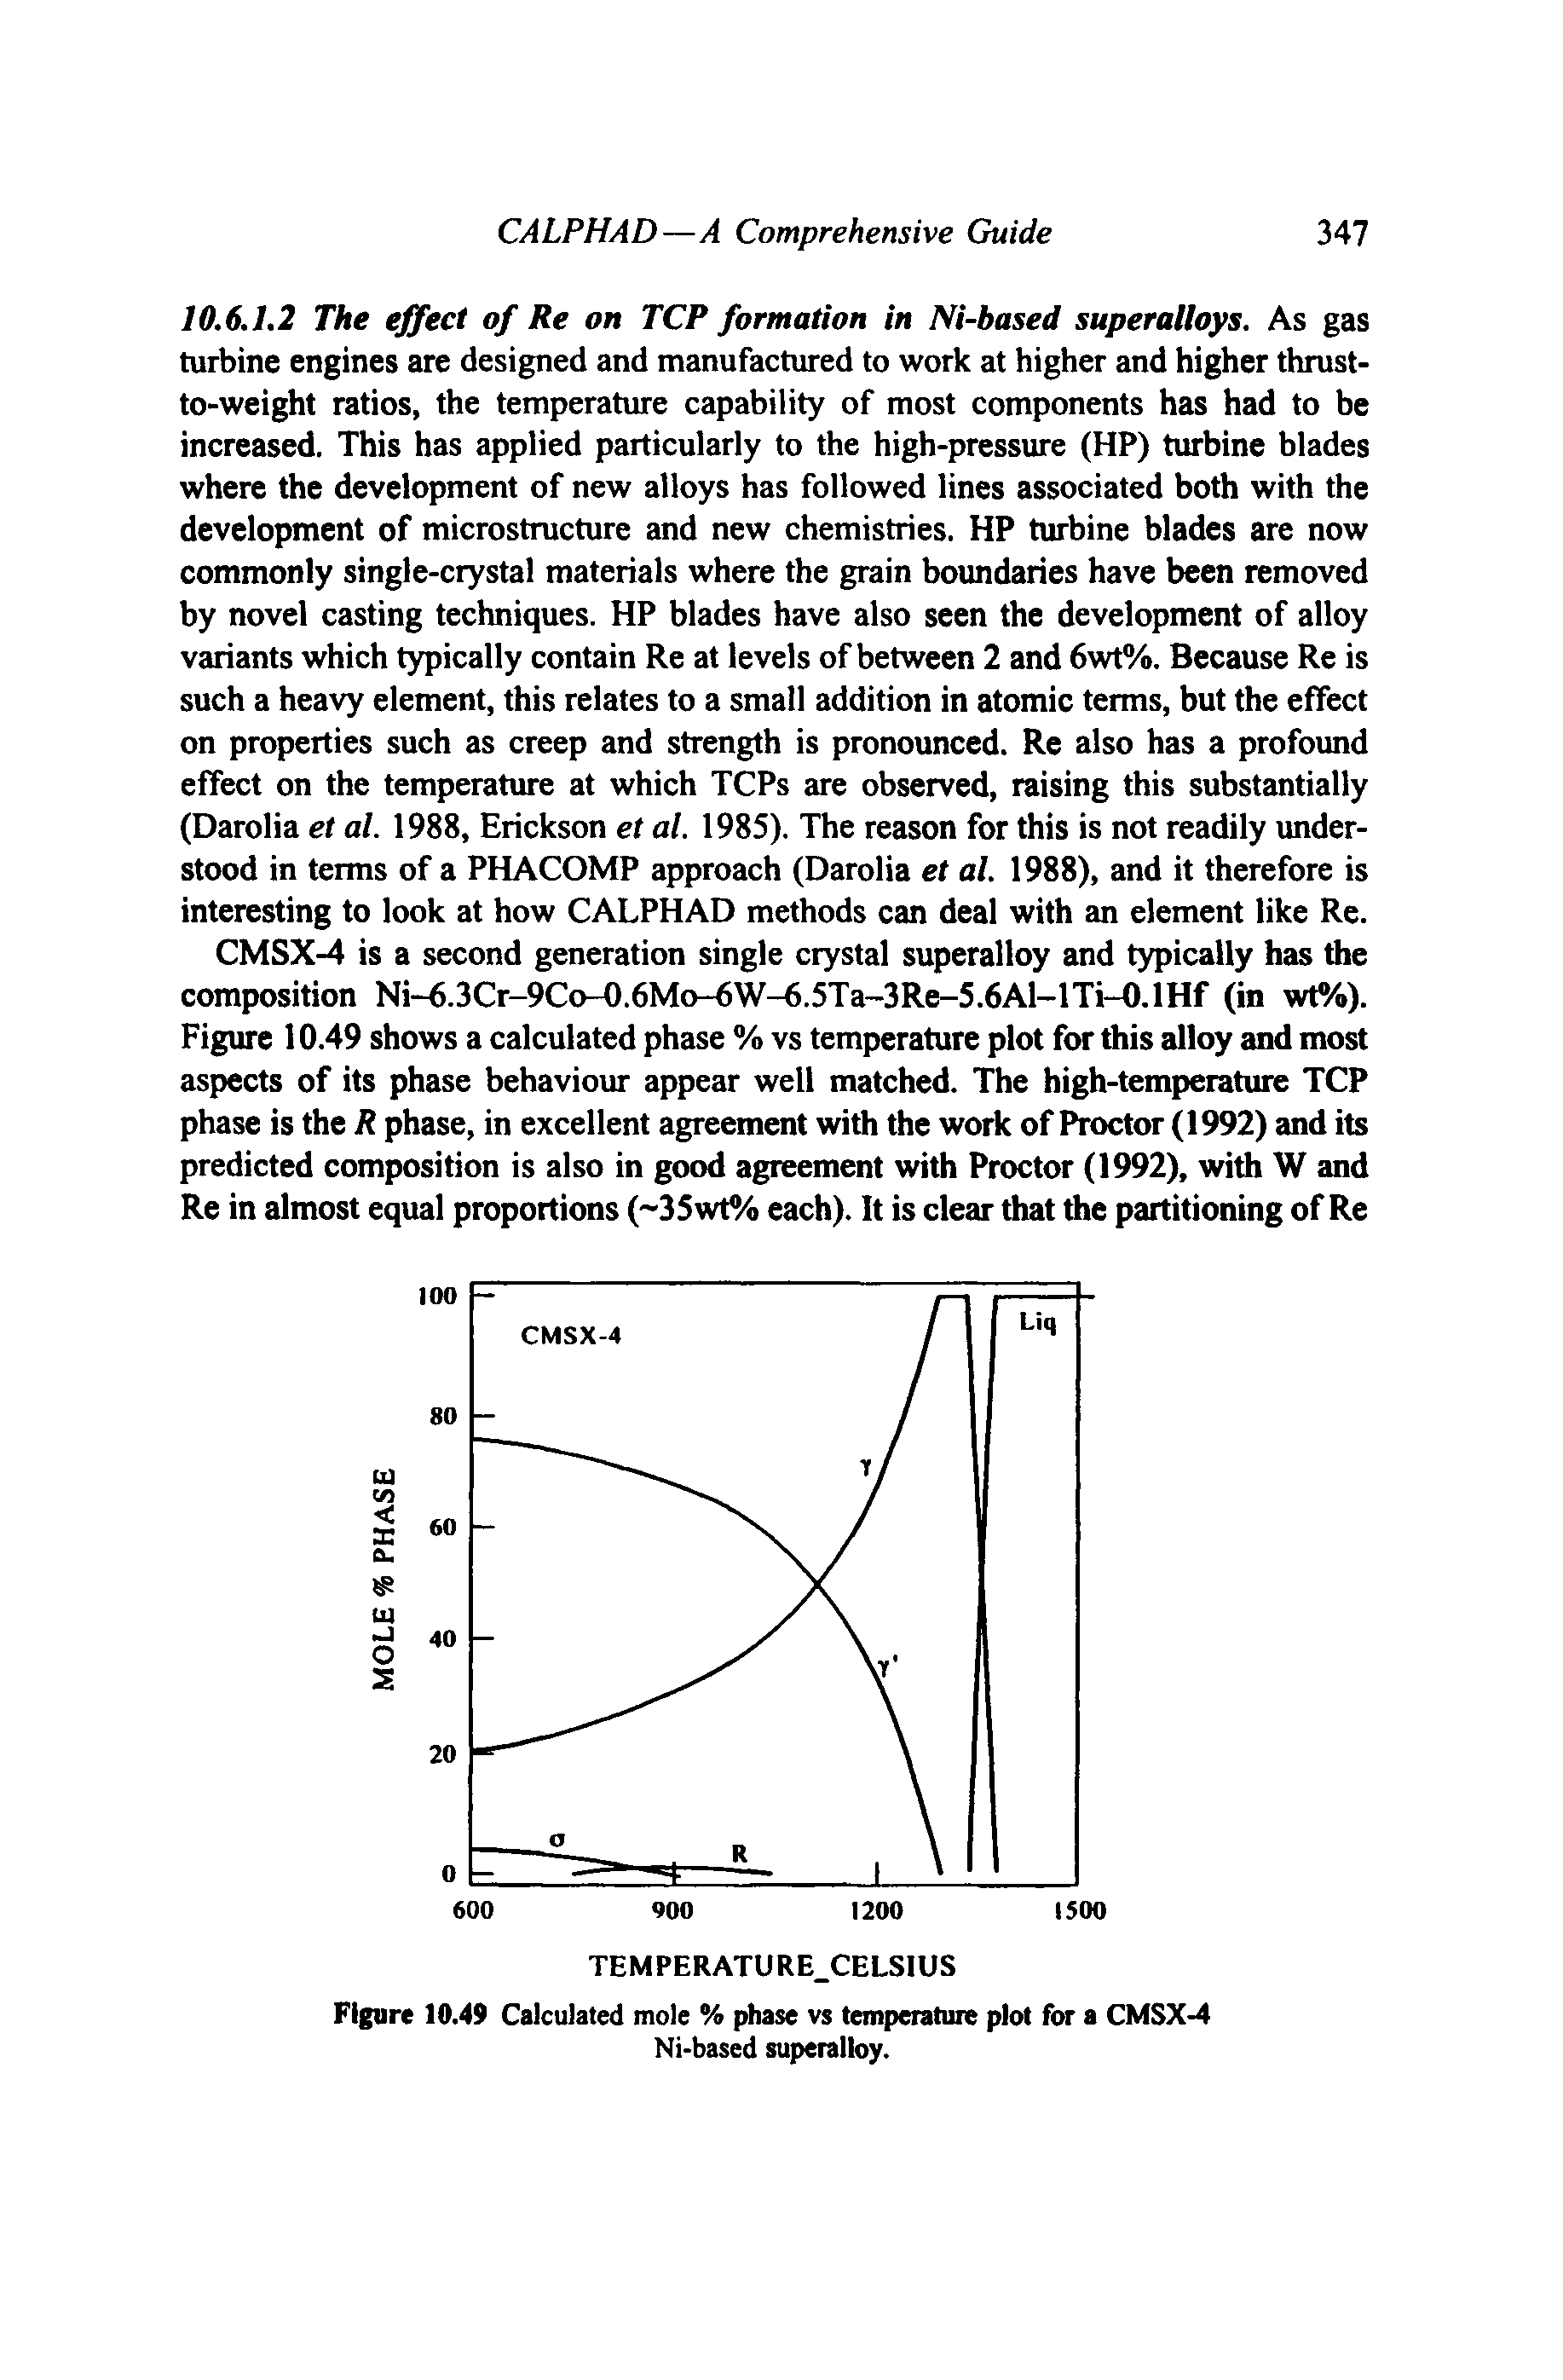 Figure 10.49 Calculated mole % phase vs temperature plot for a CMSX-4 Ni-based superalloy.